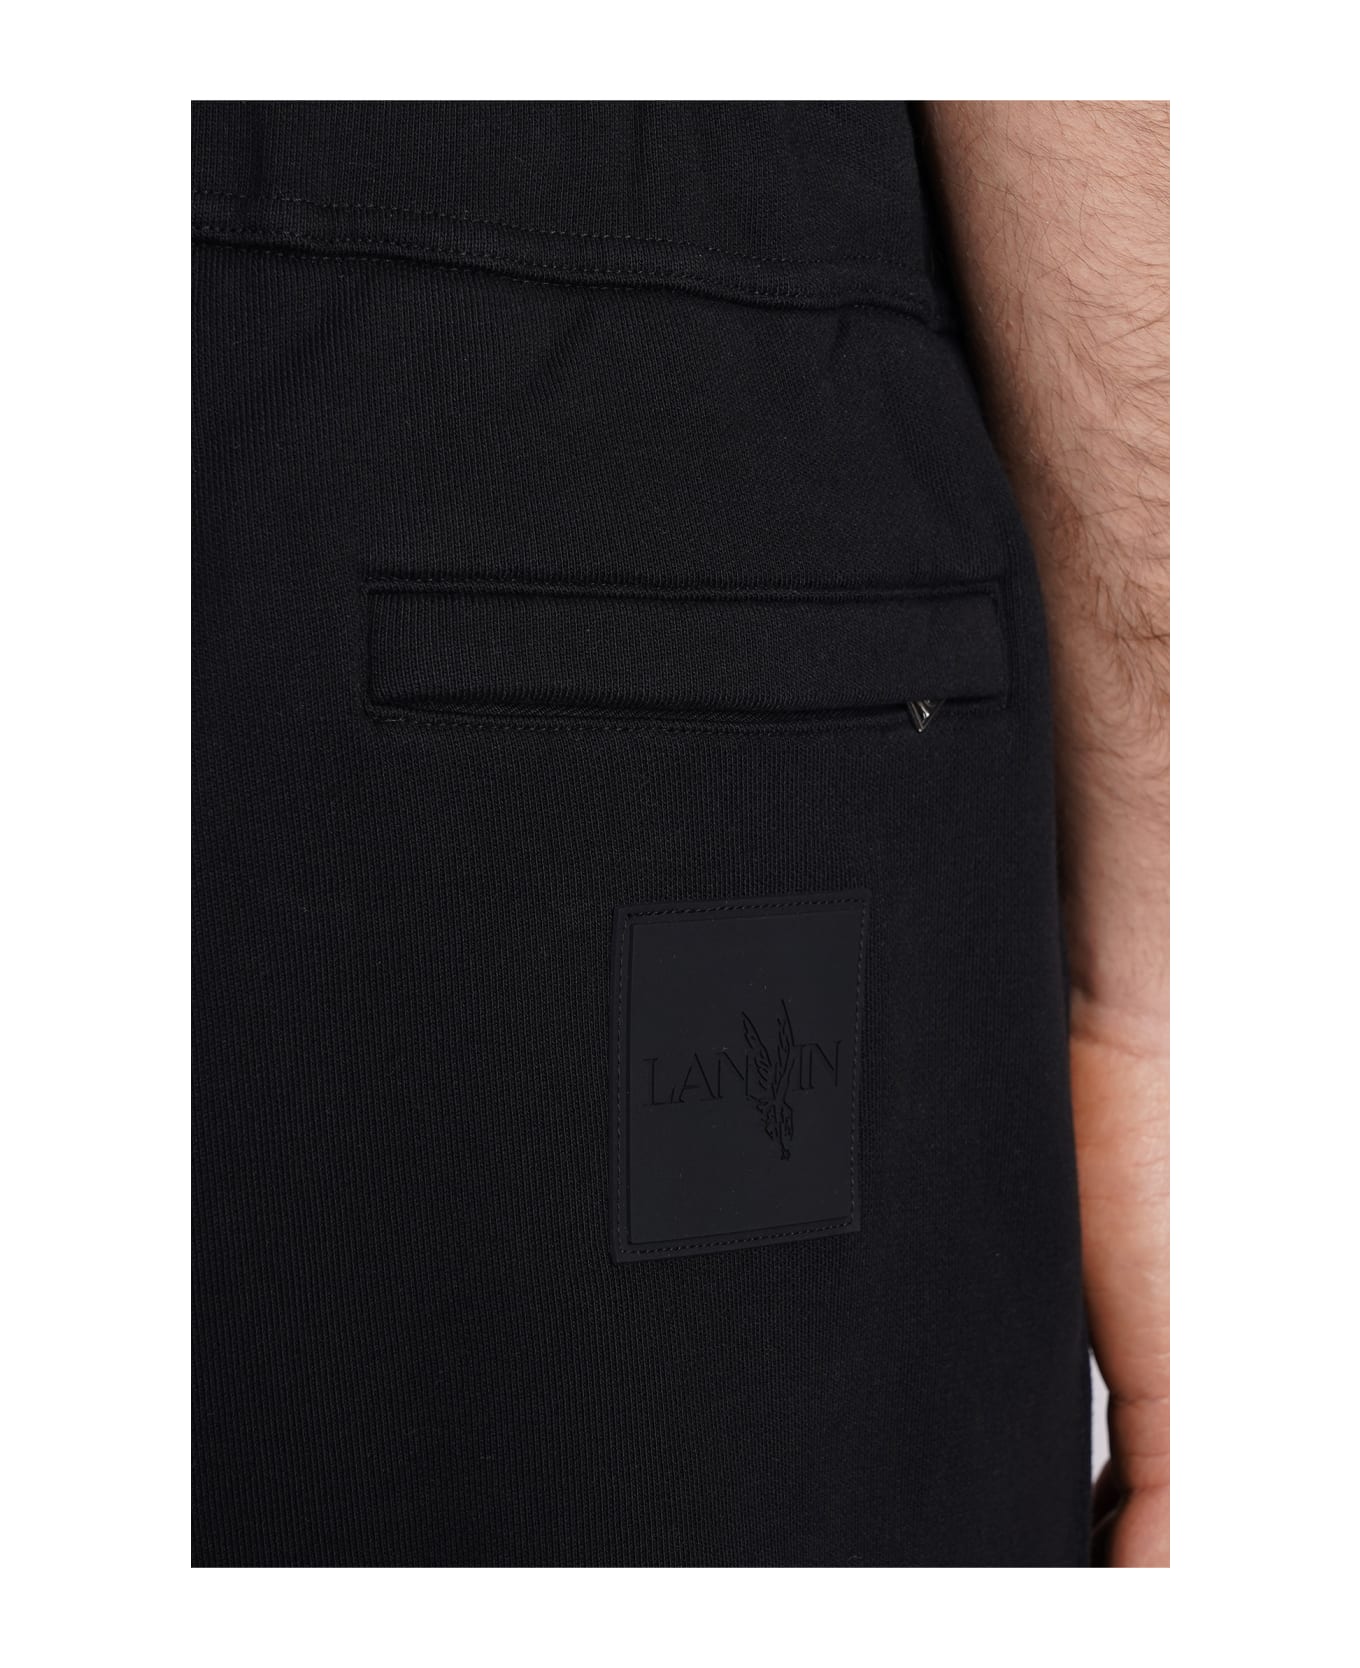 Lanvin Pants In Black Cotton - black スウェットパンツ